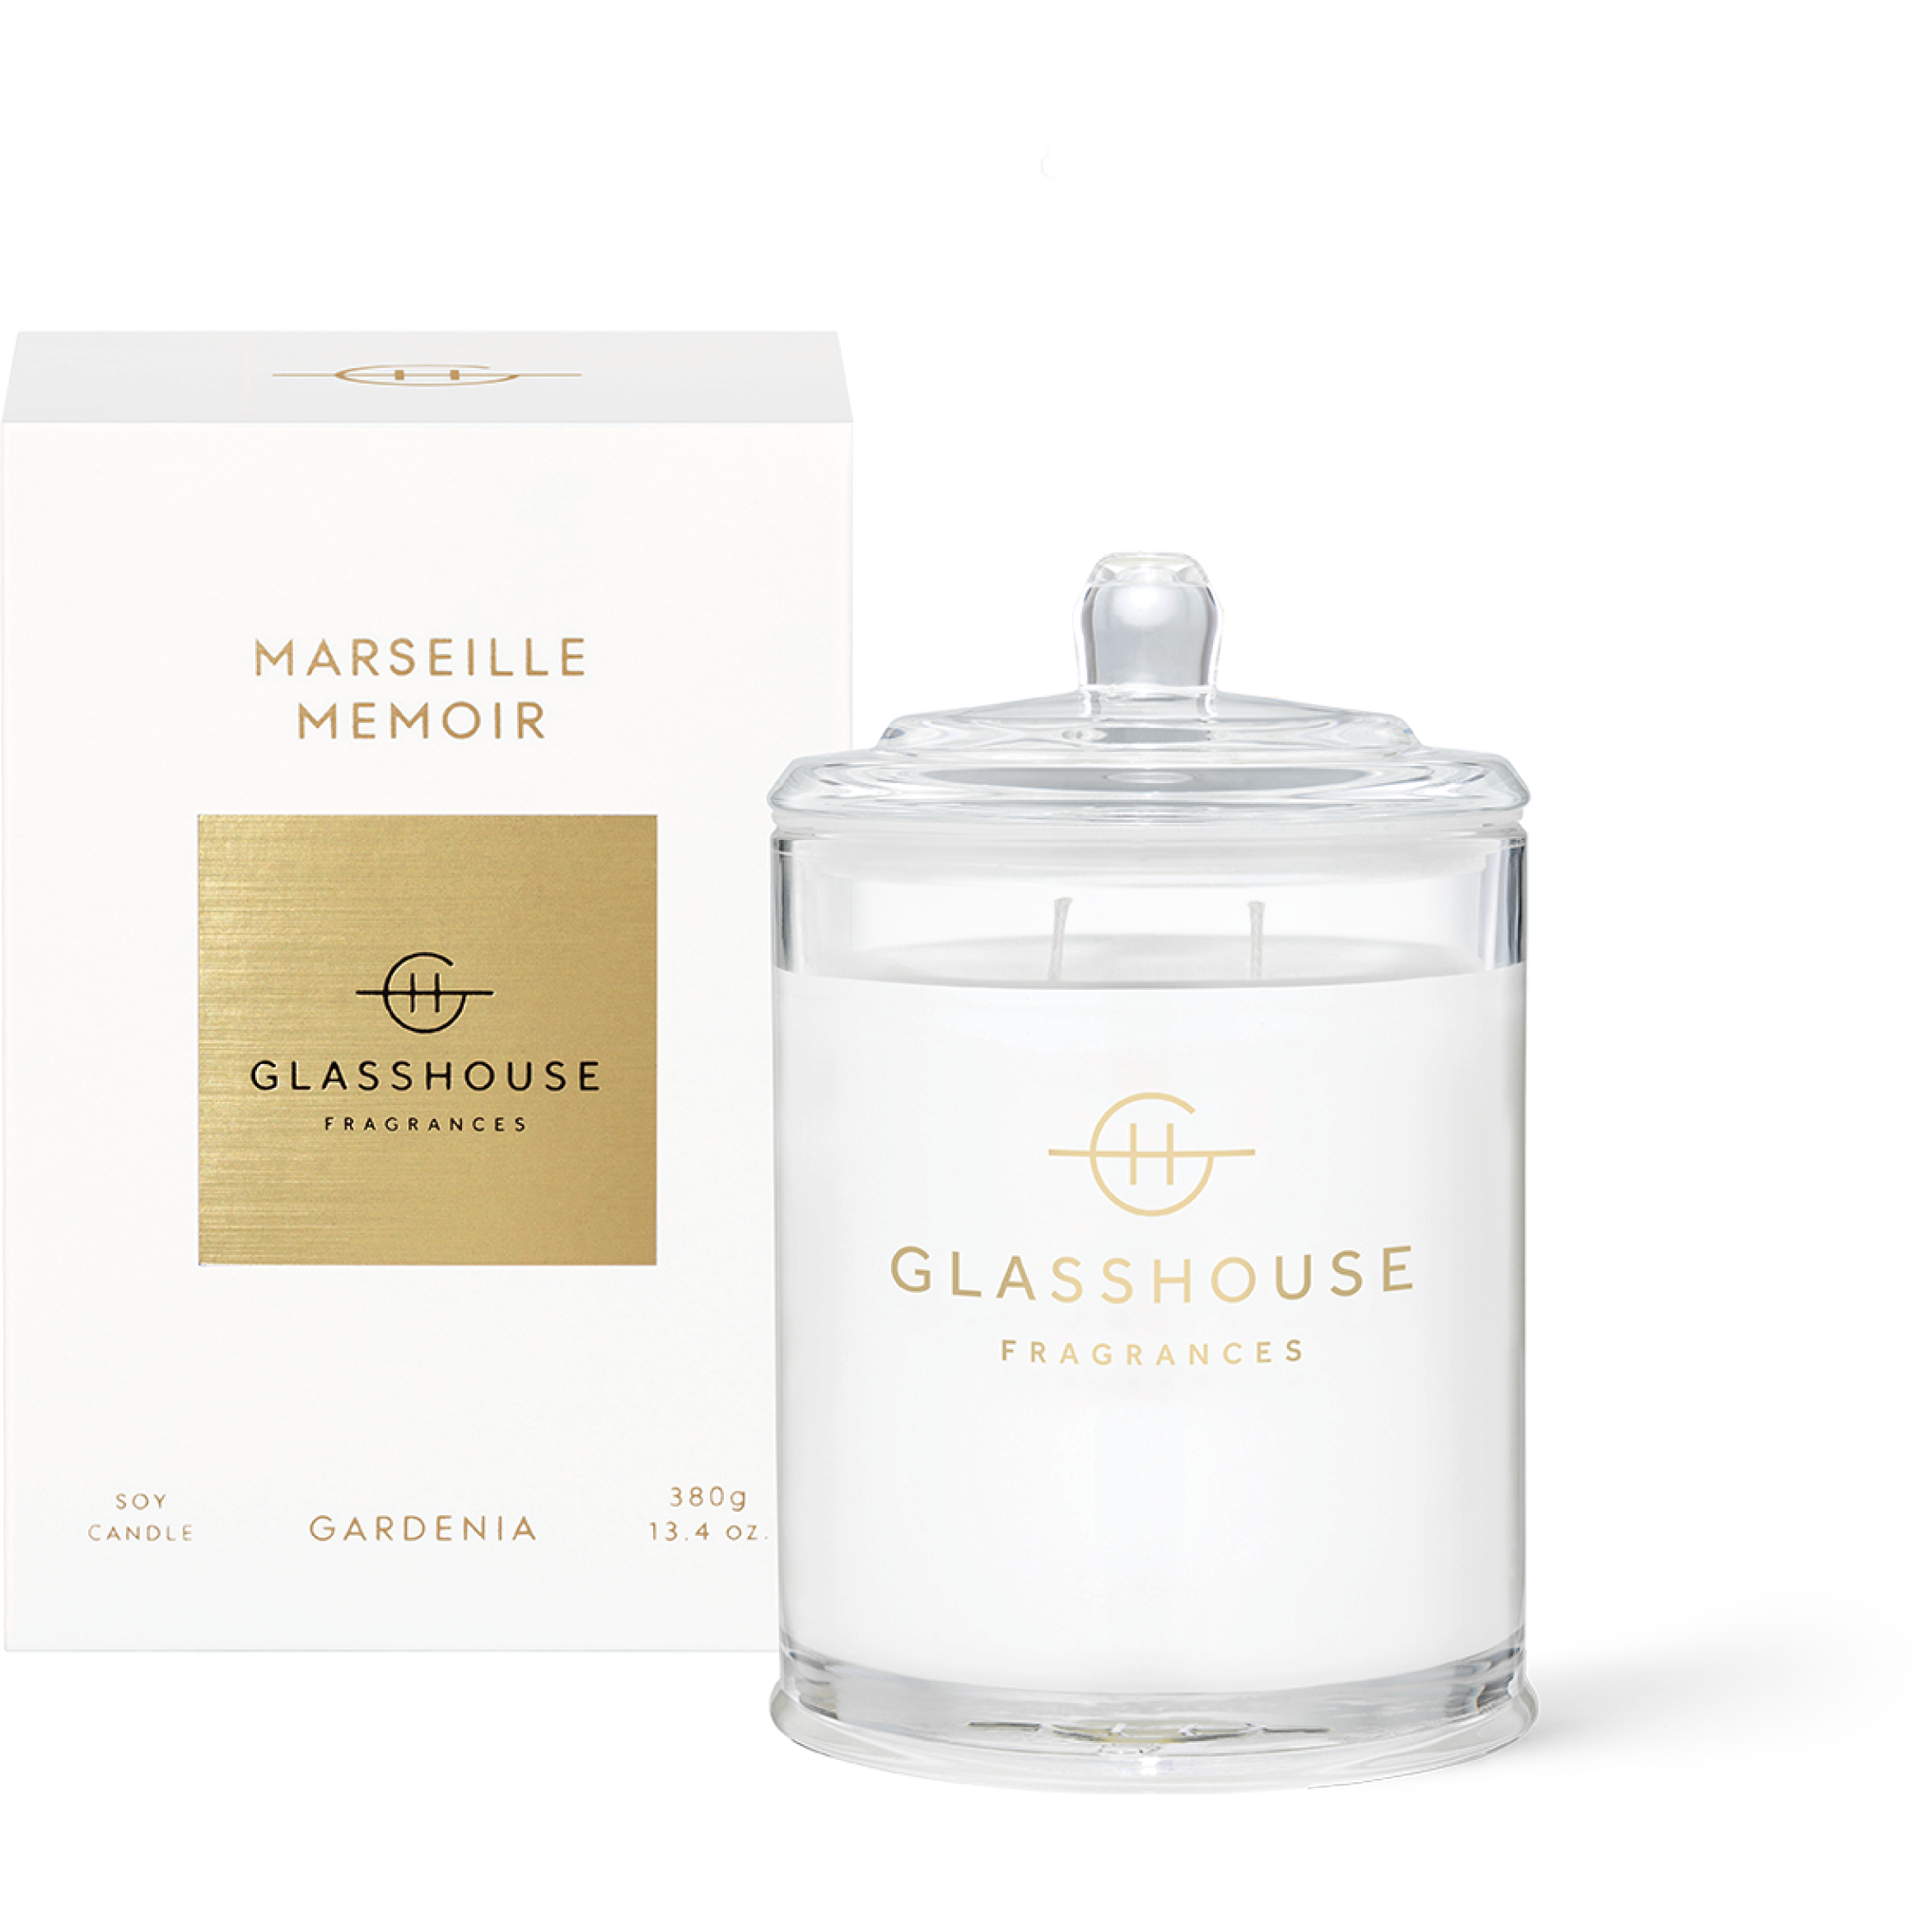 Glasshouse MARSEILLE MEMOIR Candle